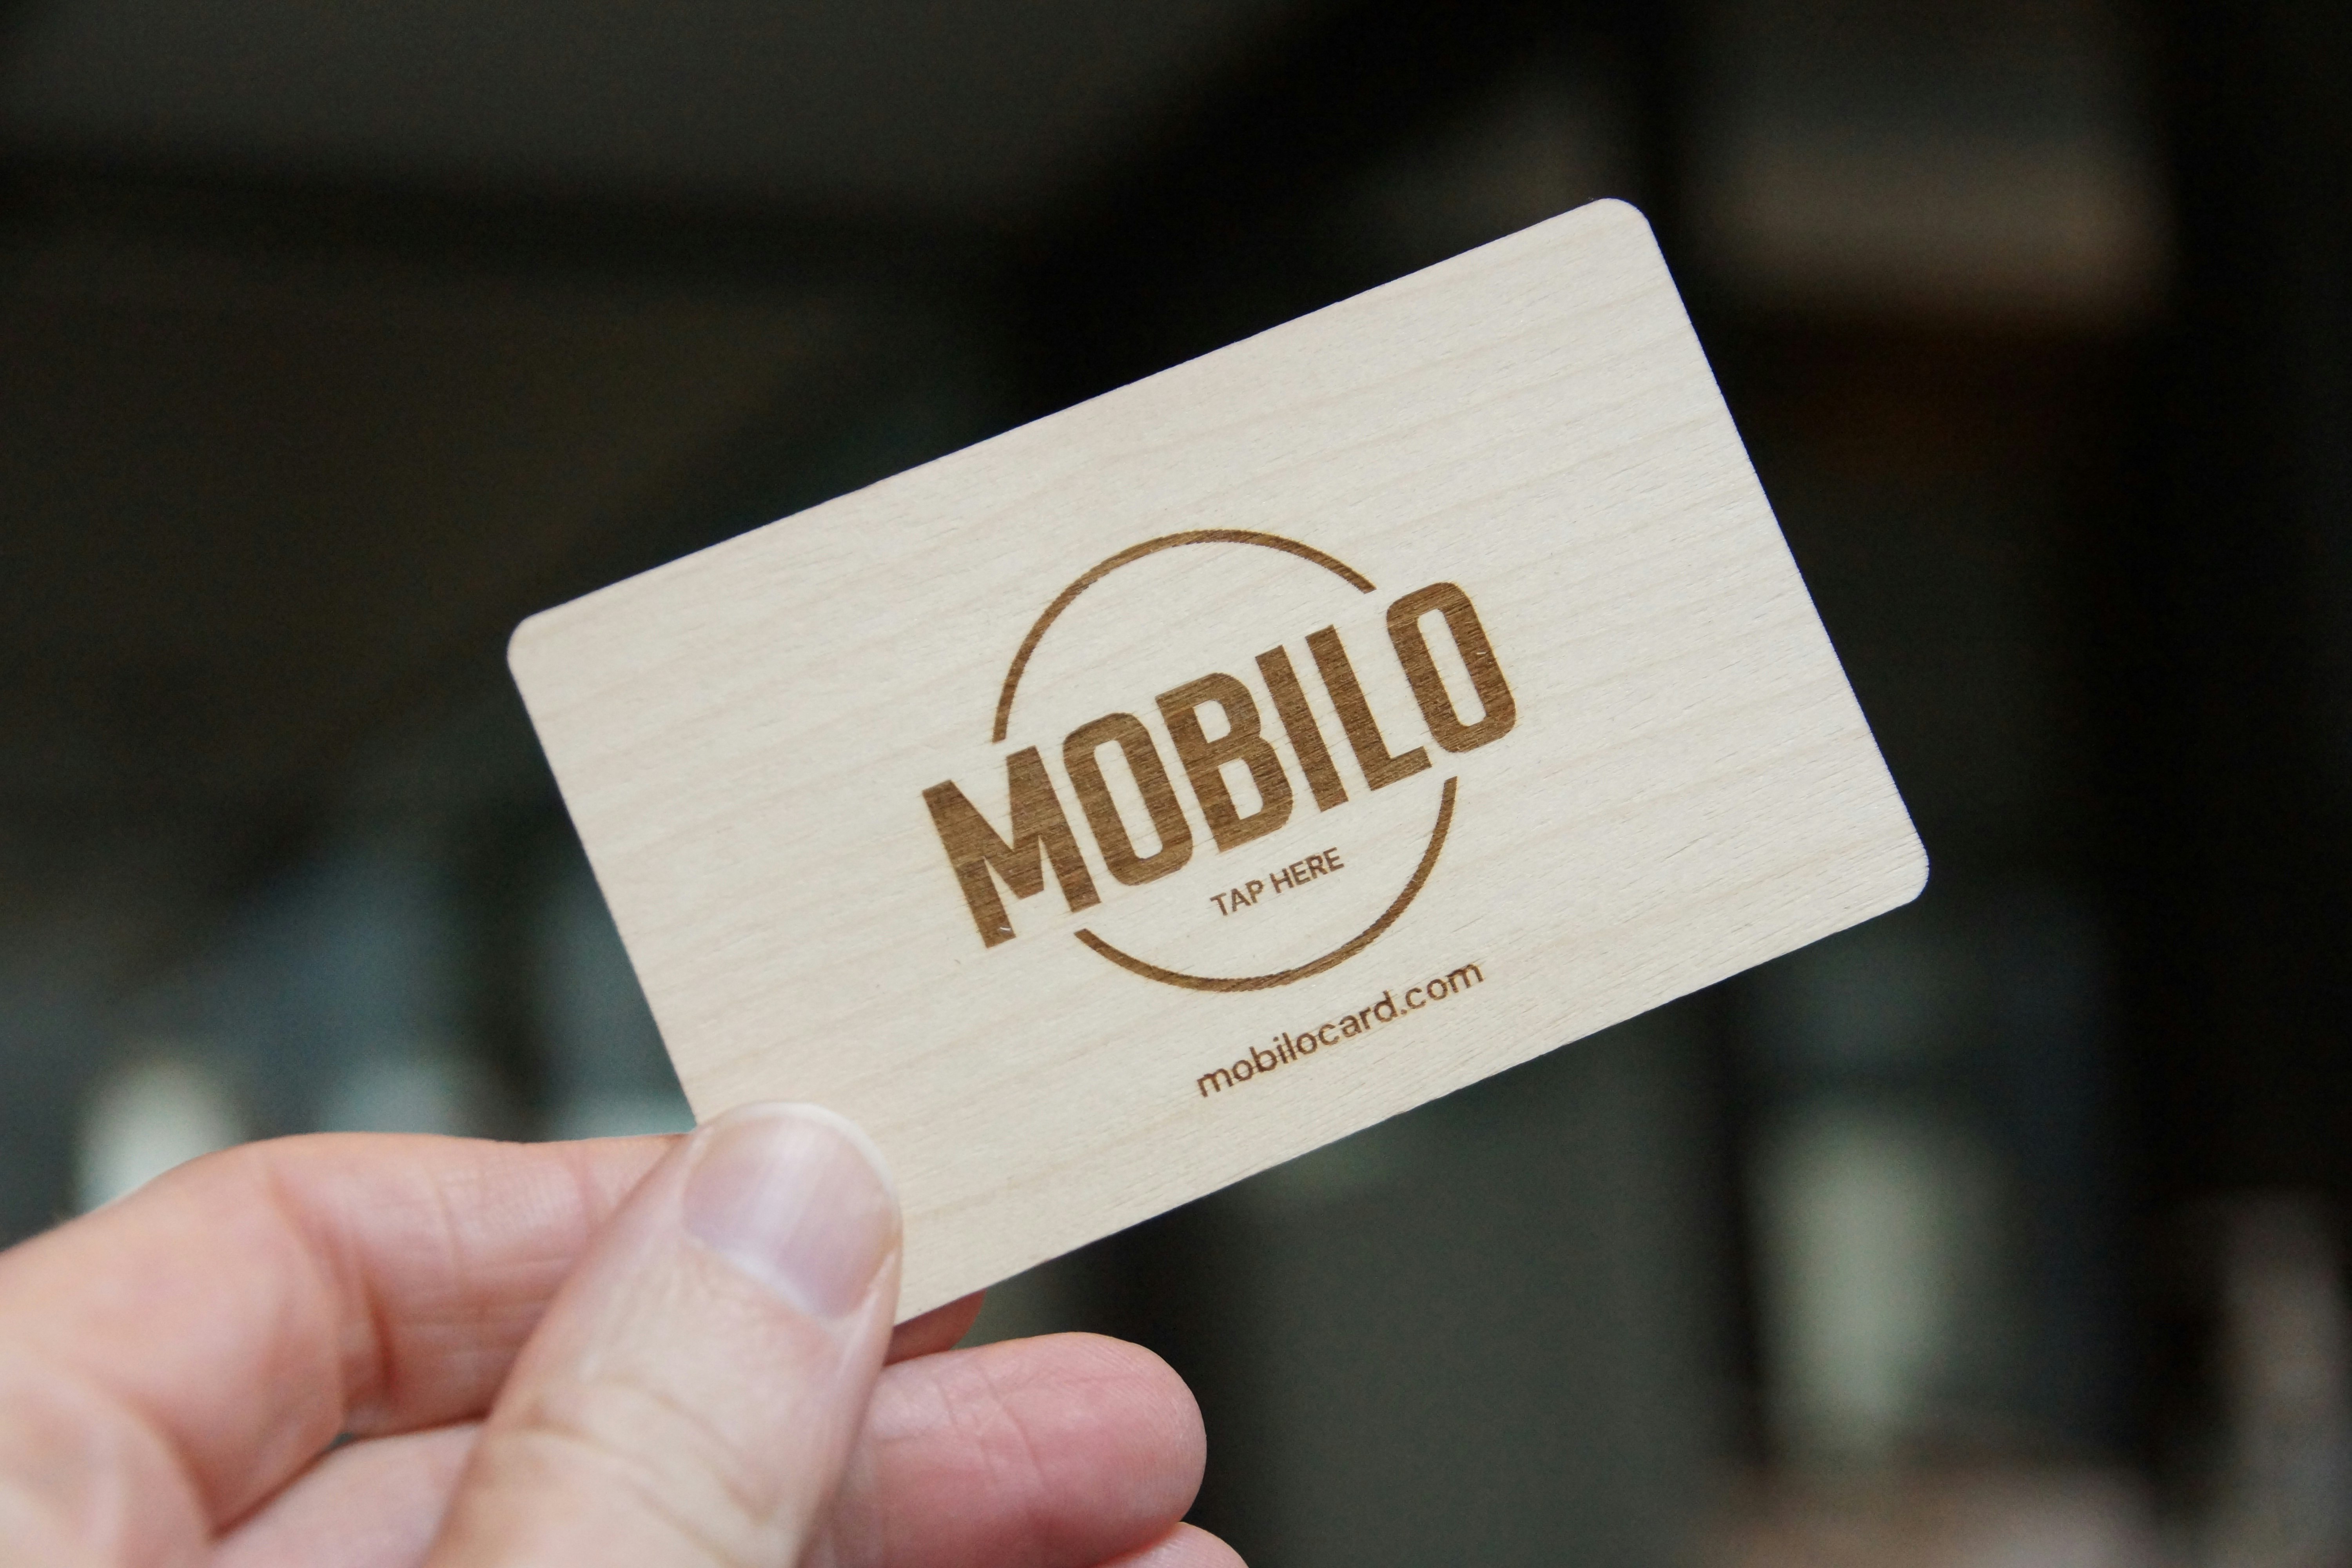 Mobilo  The Mobilo Metal Card